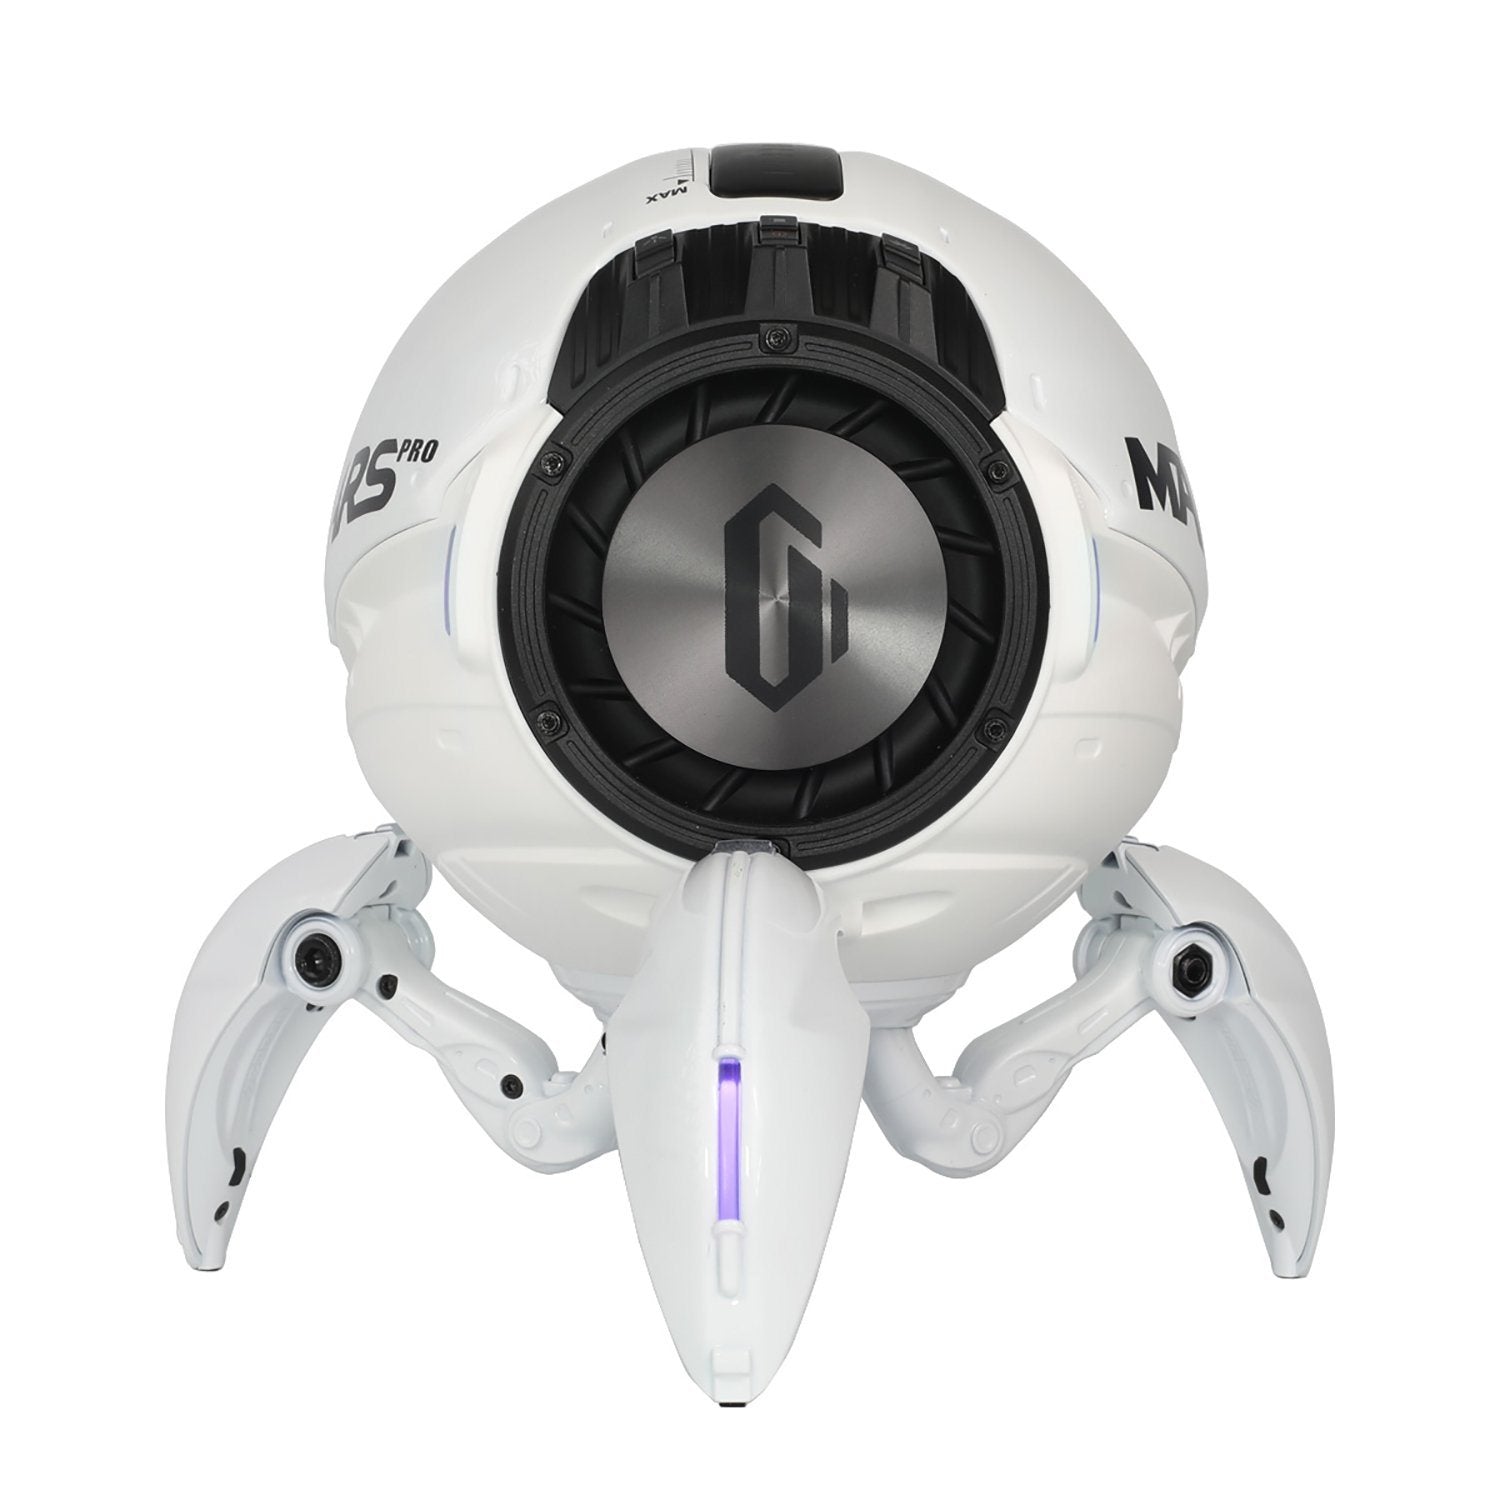 Gravastar Mars Pro Wireless Bluetooth 5.0 Dystopian Robotic Speaker Default Gravastar 